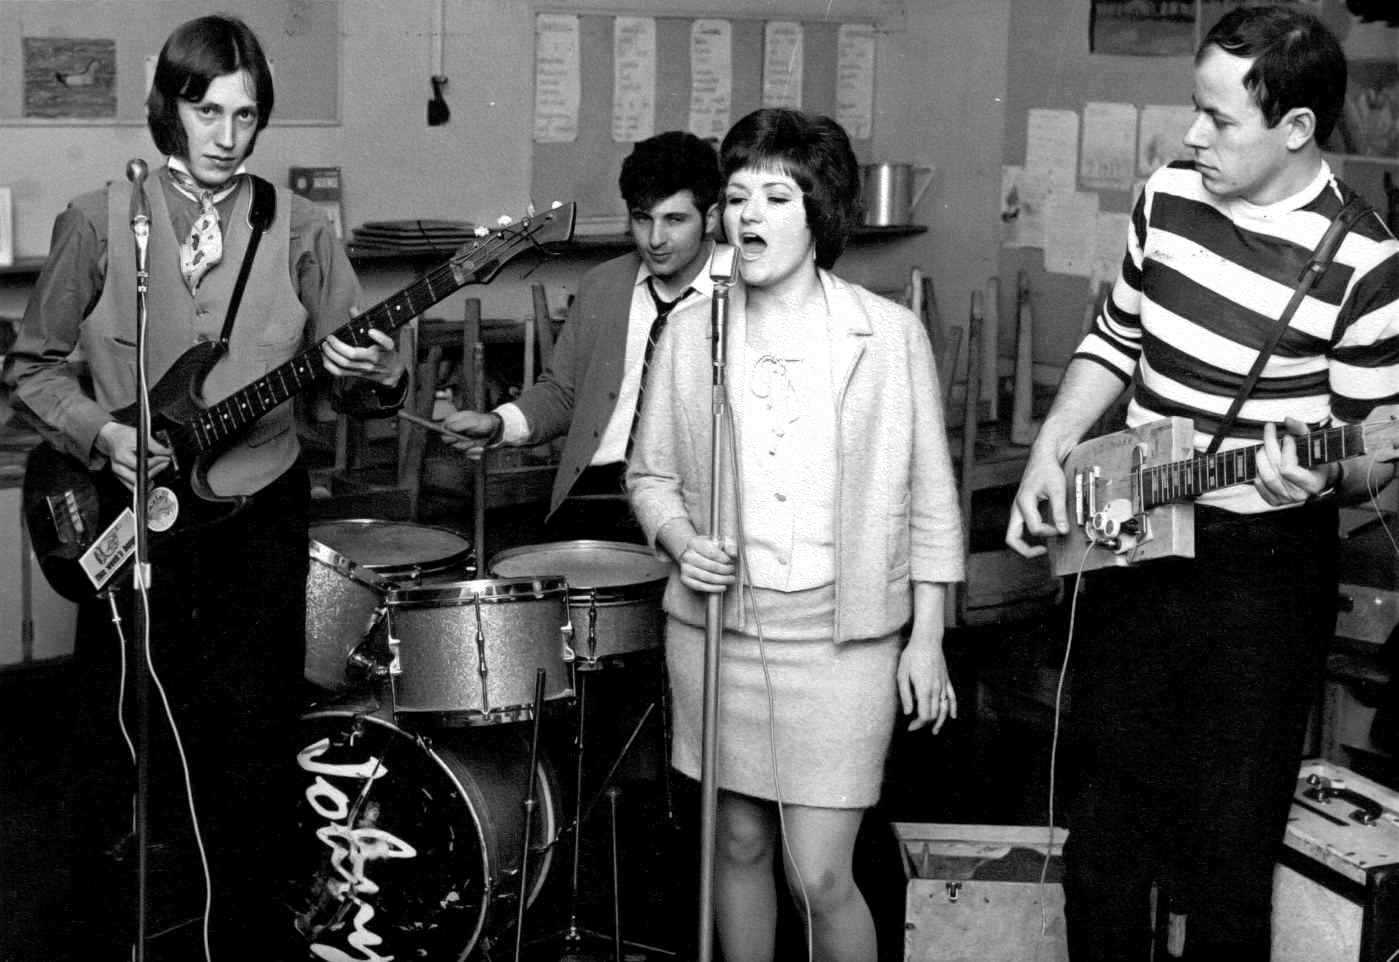 Stephen Giles band practice, 1968